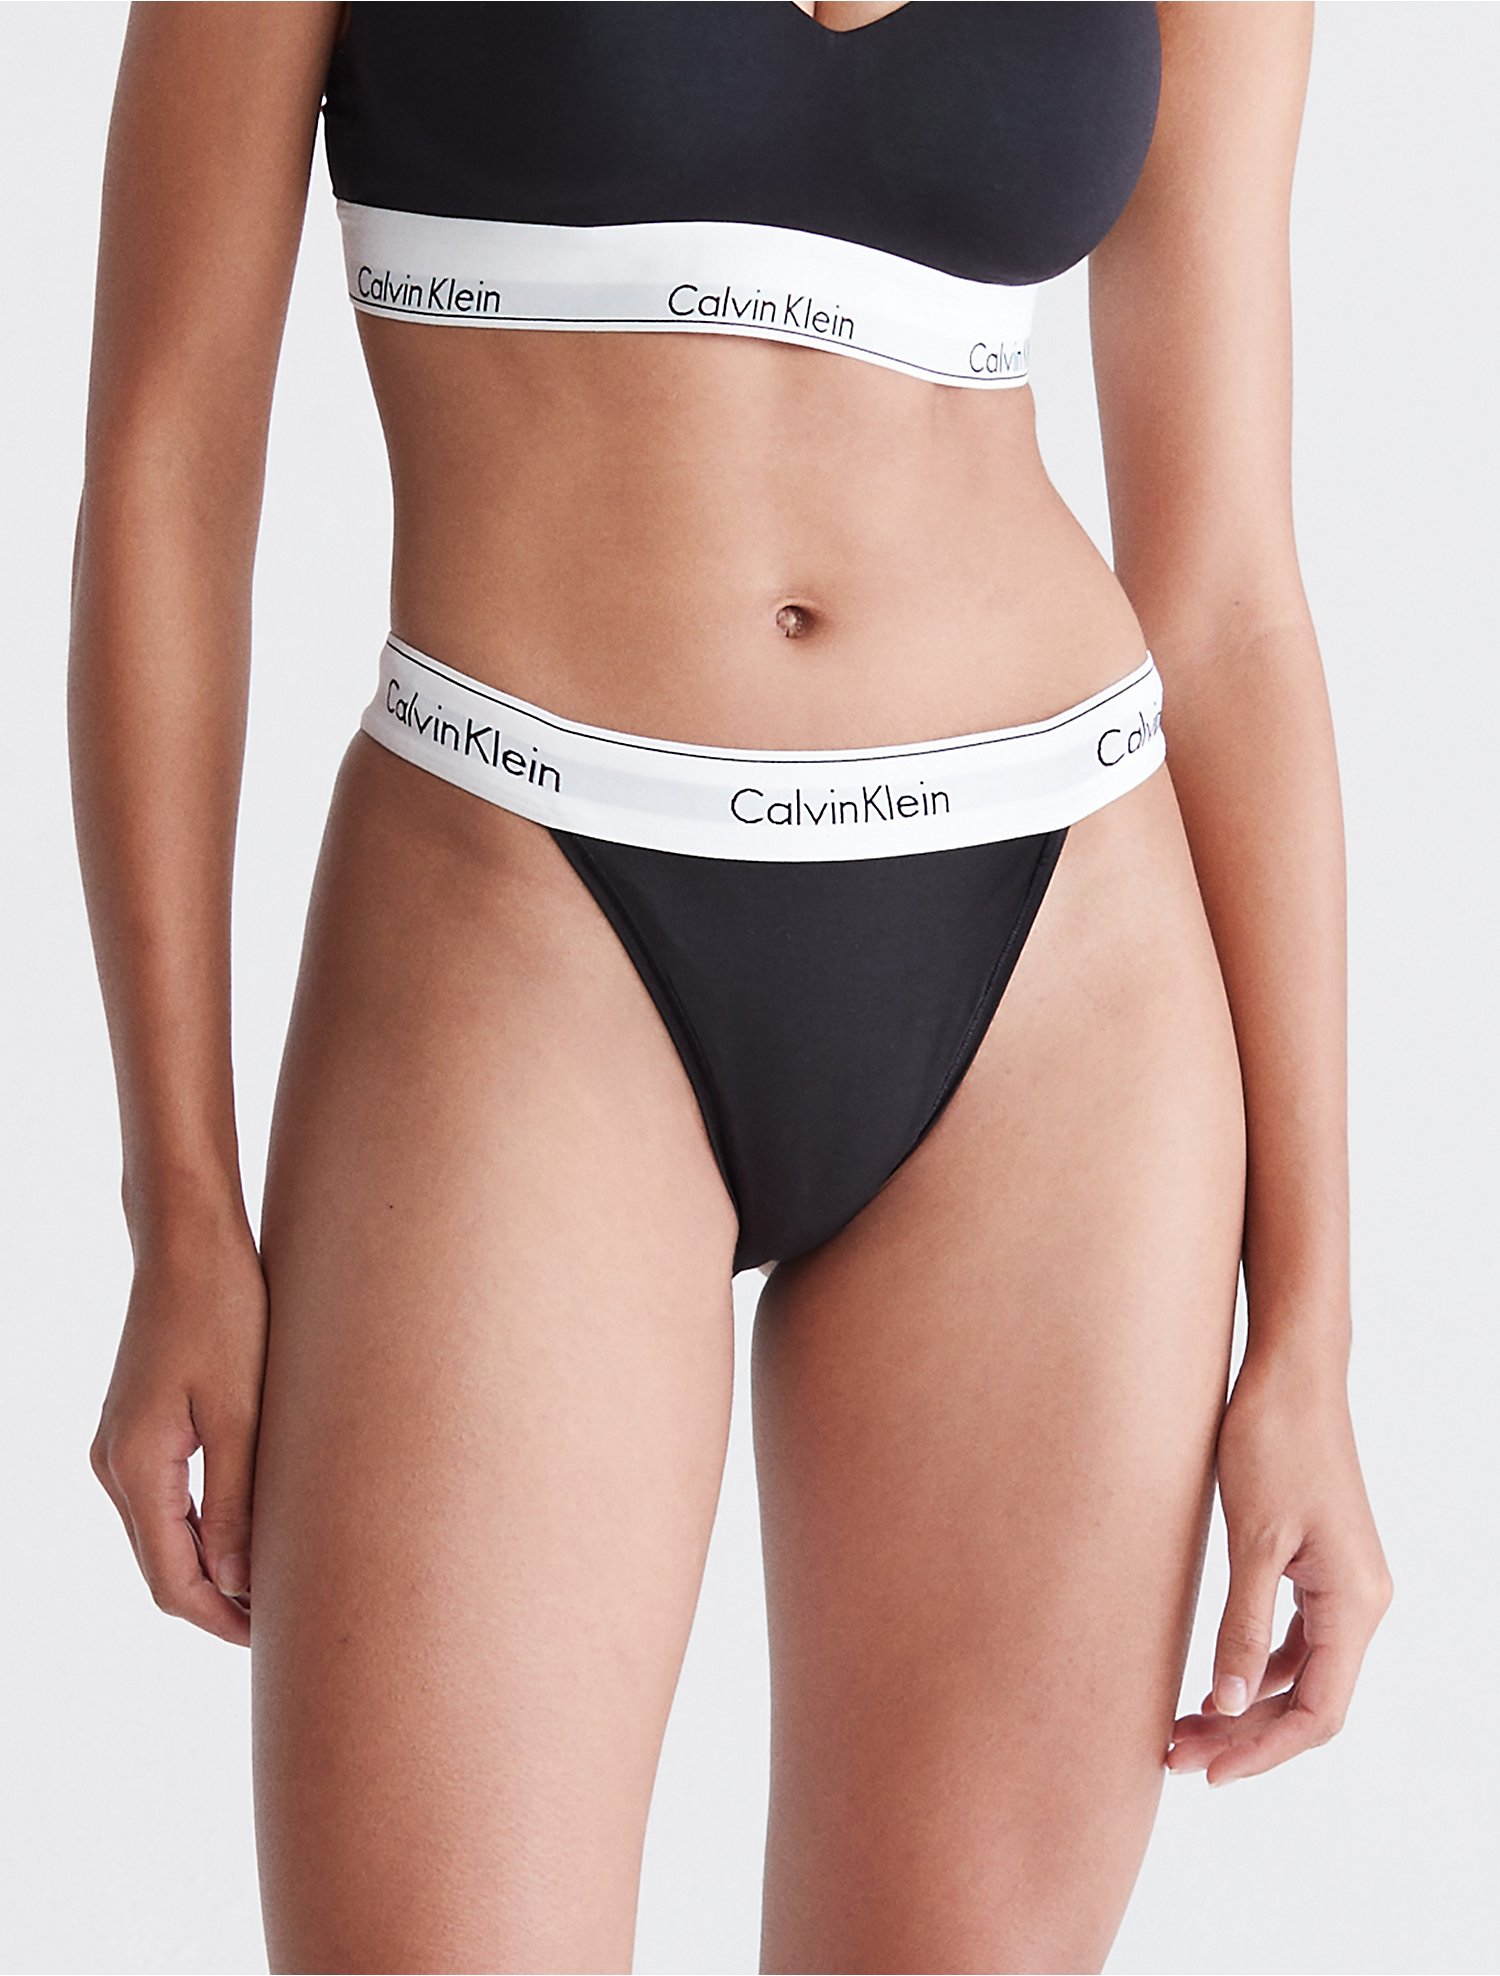 Introducir 56+ imagen calvin klein tanga underwear